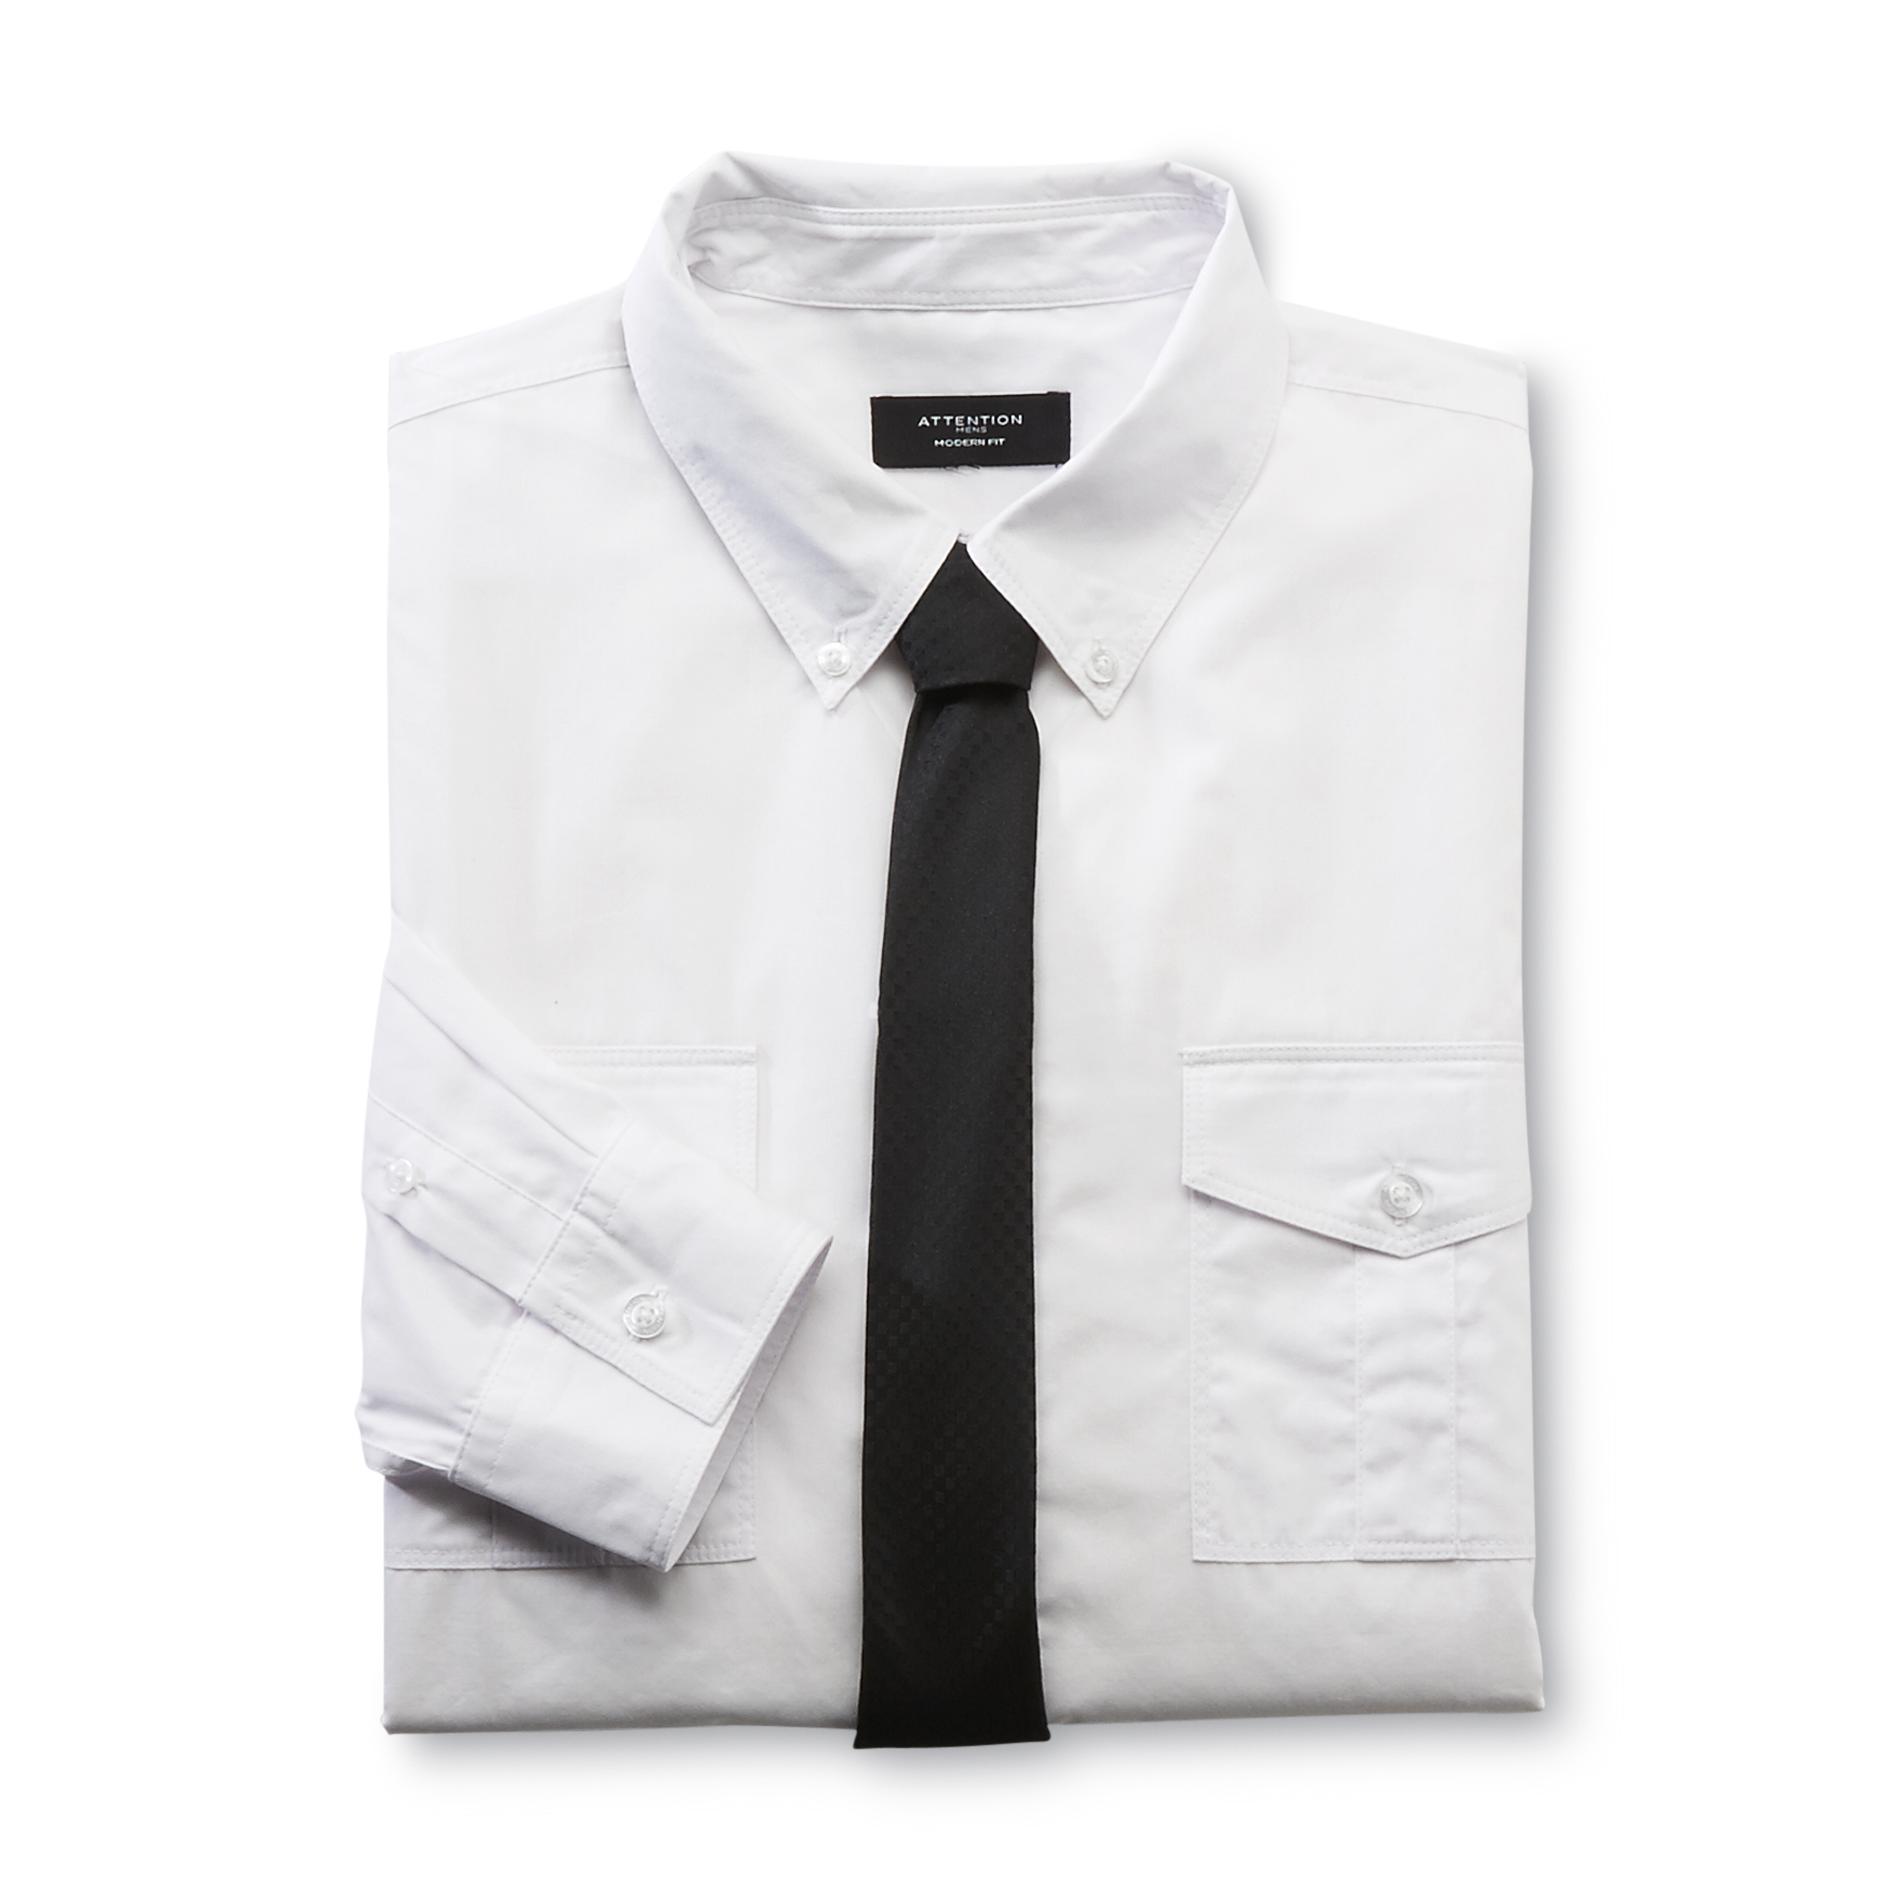 Attention Men's Dress Shirt & Tie